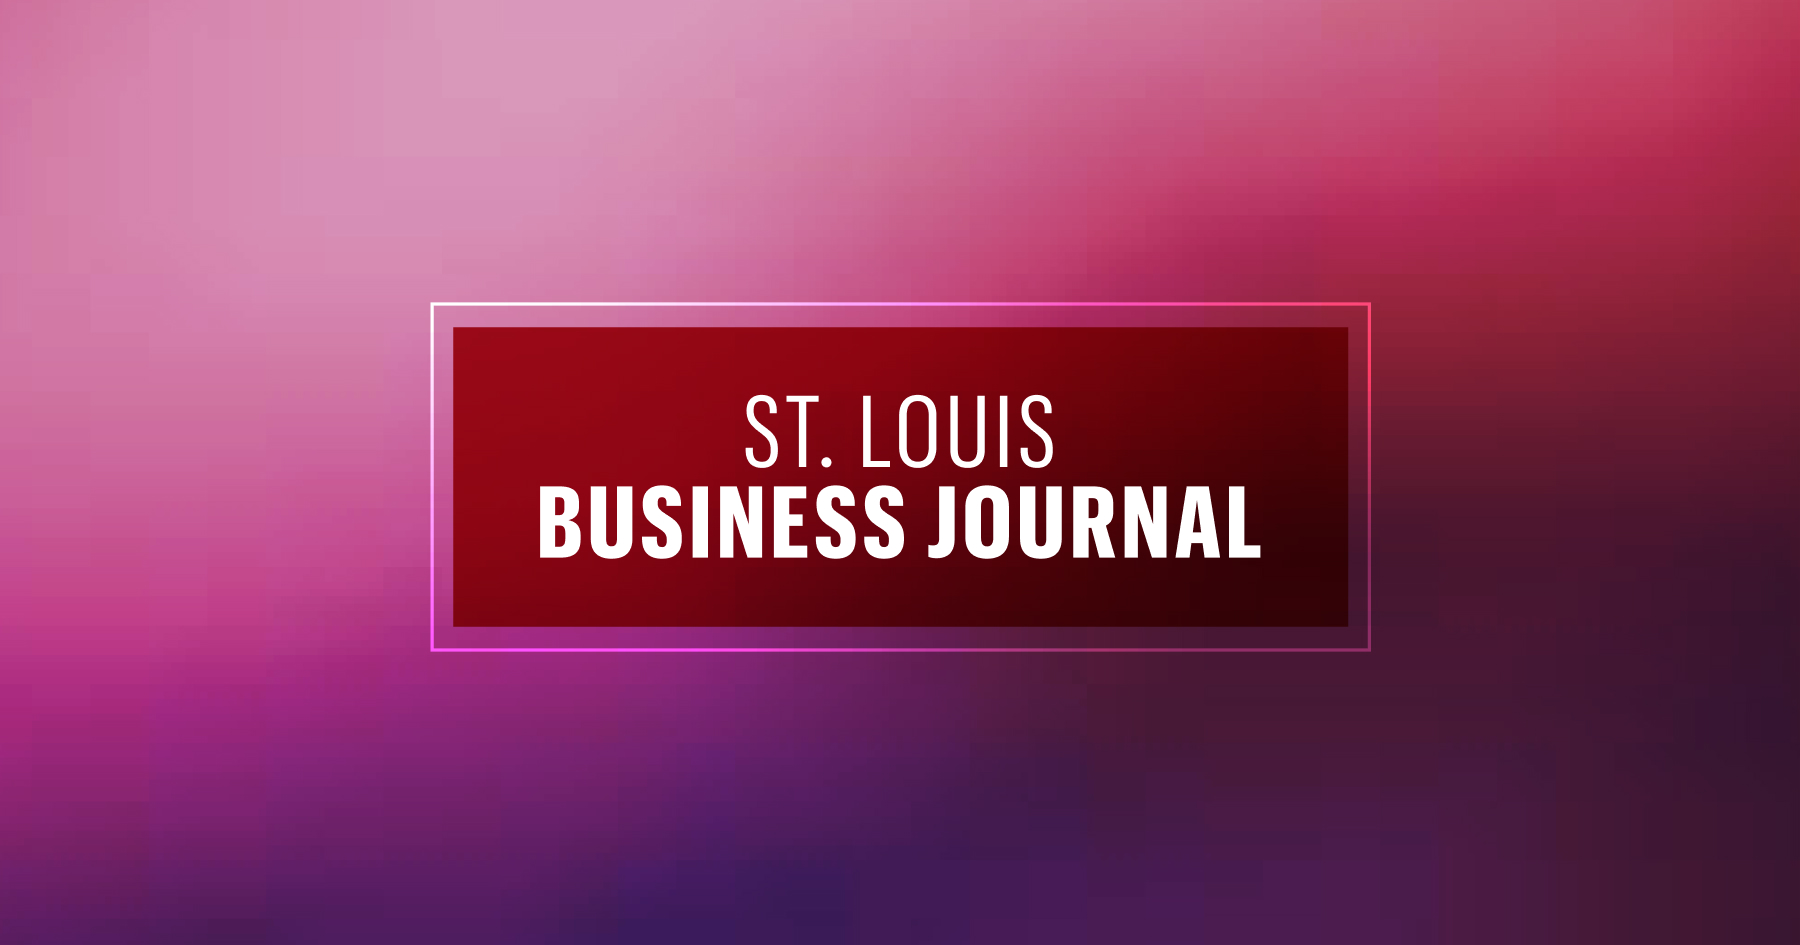 St. Louis Cardinals third baseman Nolan Arenado takes a swing at venture capital